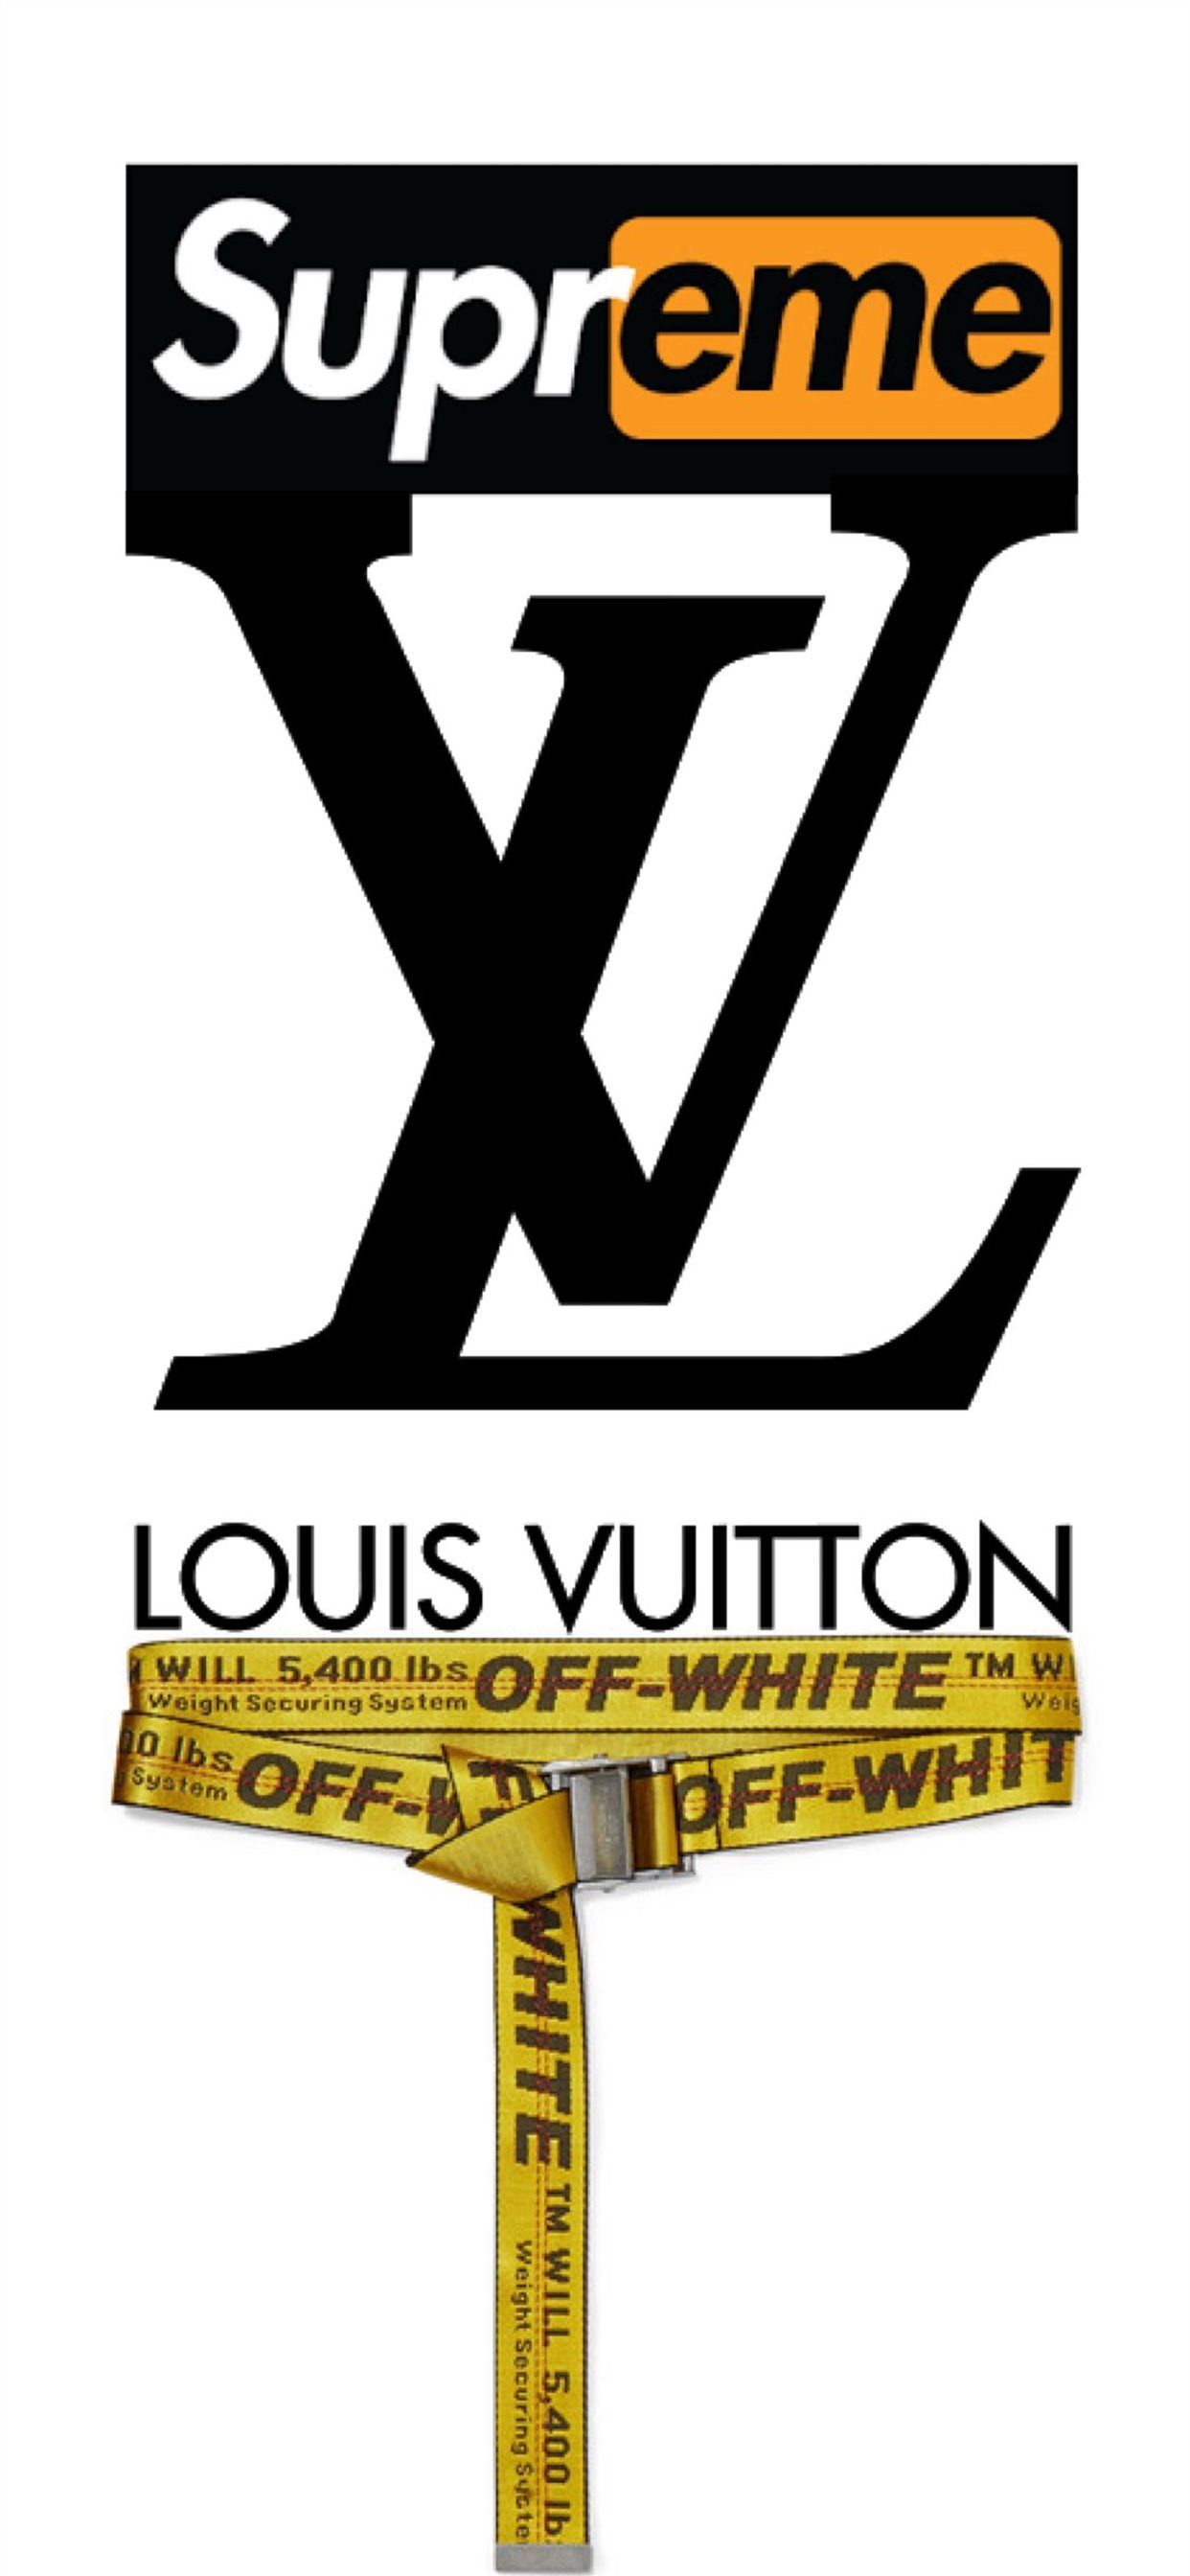 Louis Vuitton off white wallpaper iPhone X Wallpaper Free Download